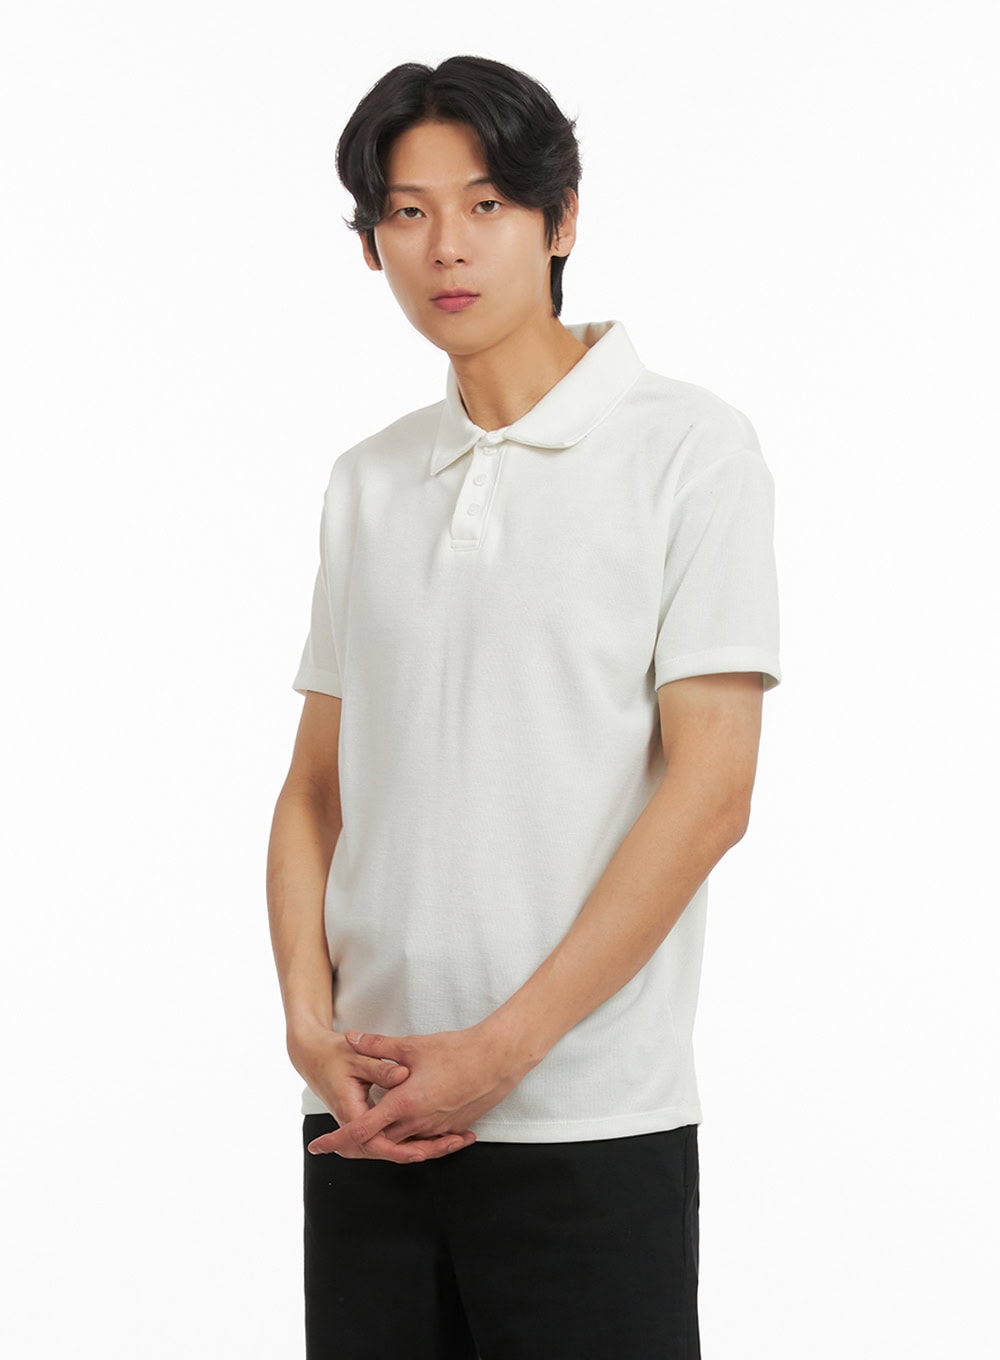 mens-basic-short-sleeve-polo-shirt-white-iy416 / White